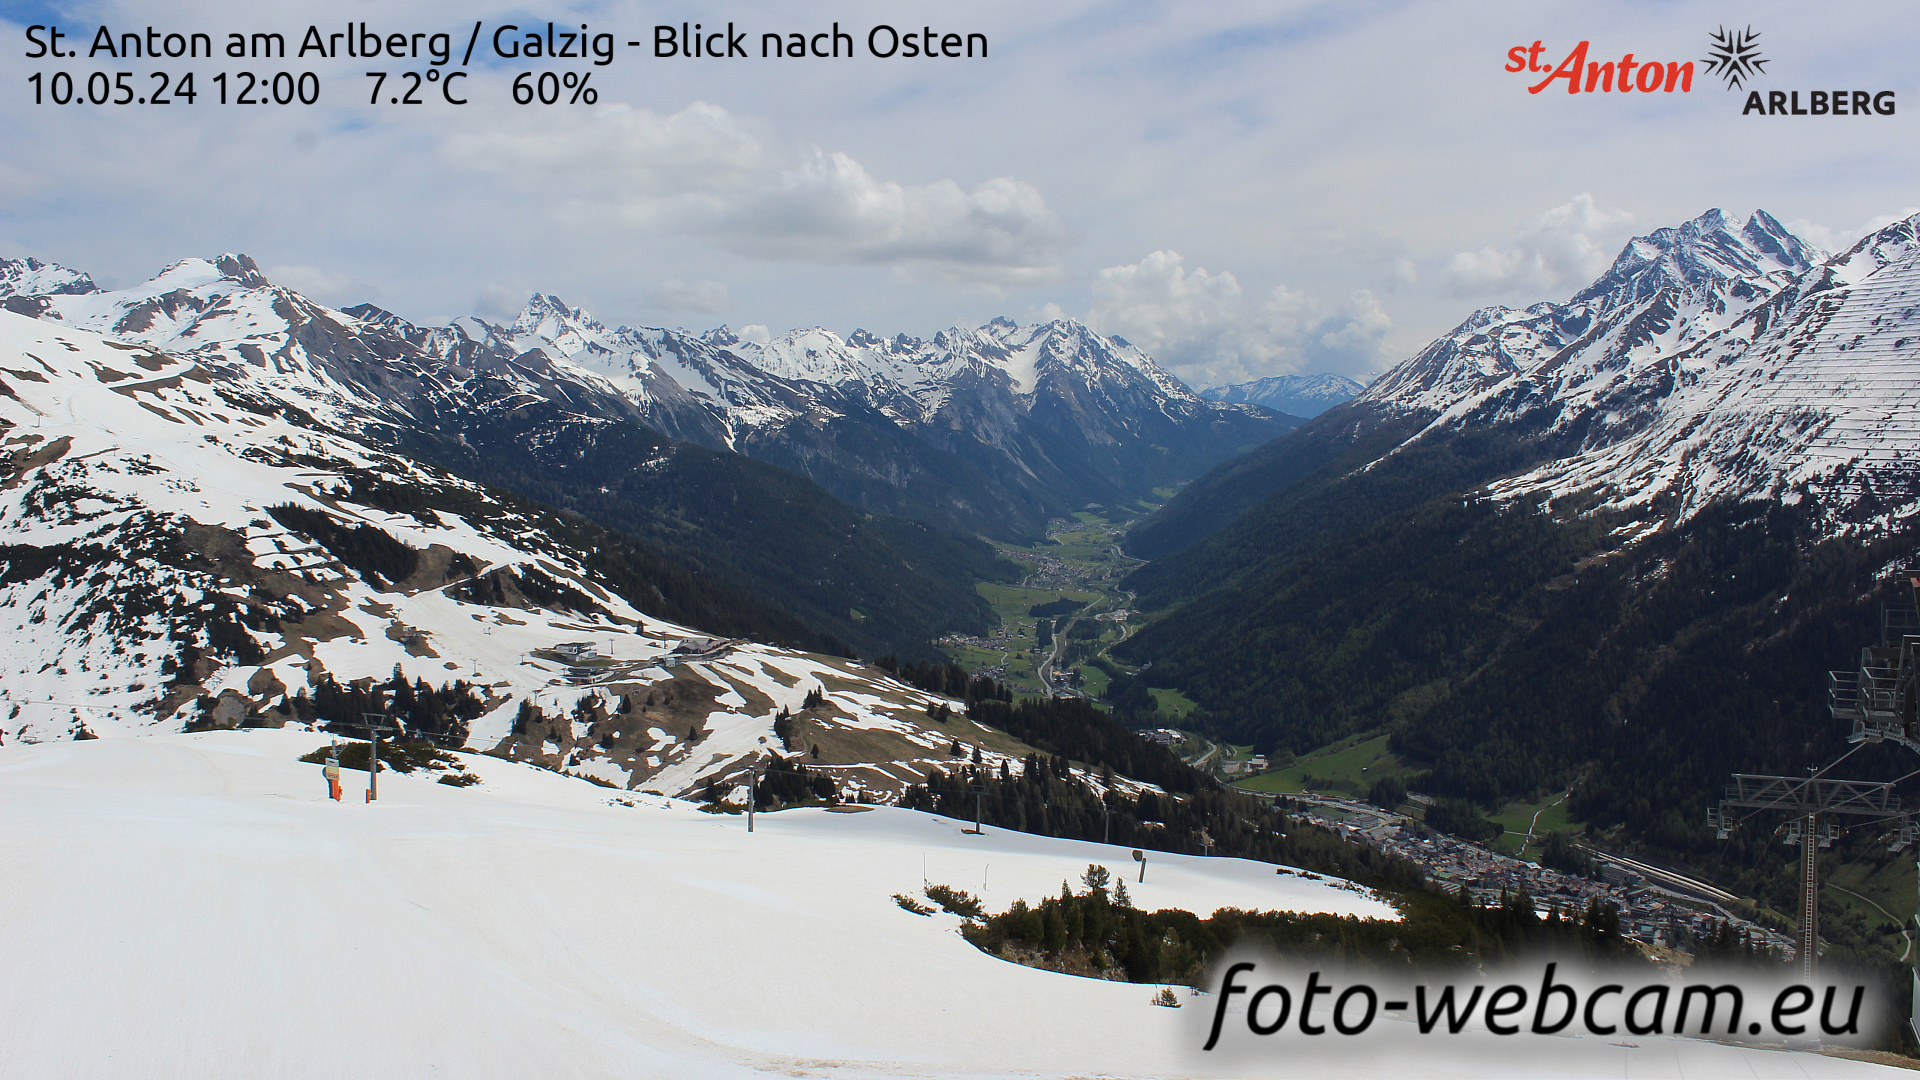 St. Anton am Arlberg Thu. 12:01